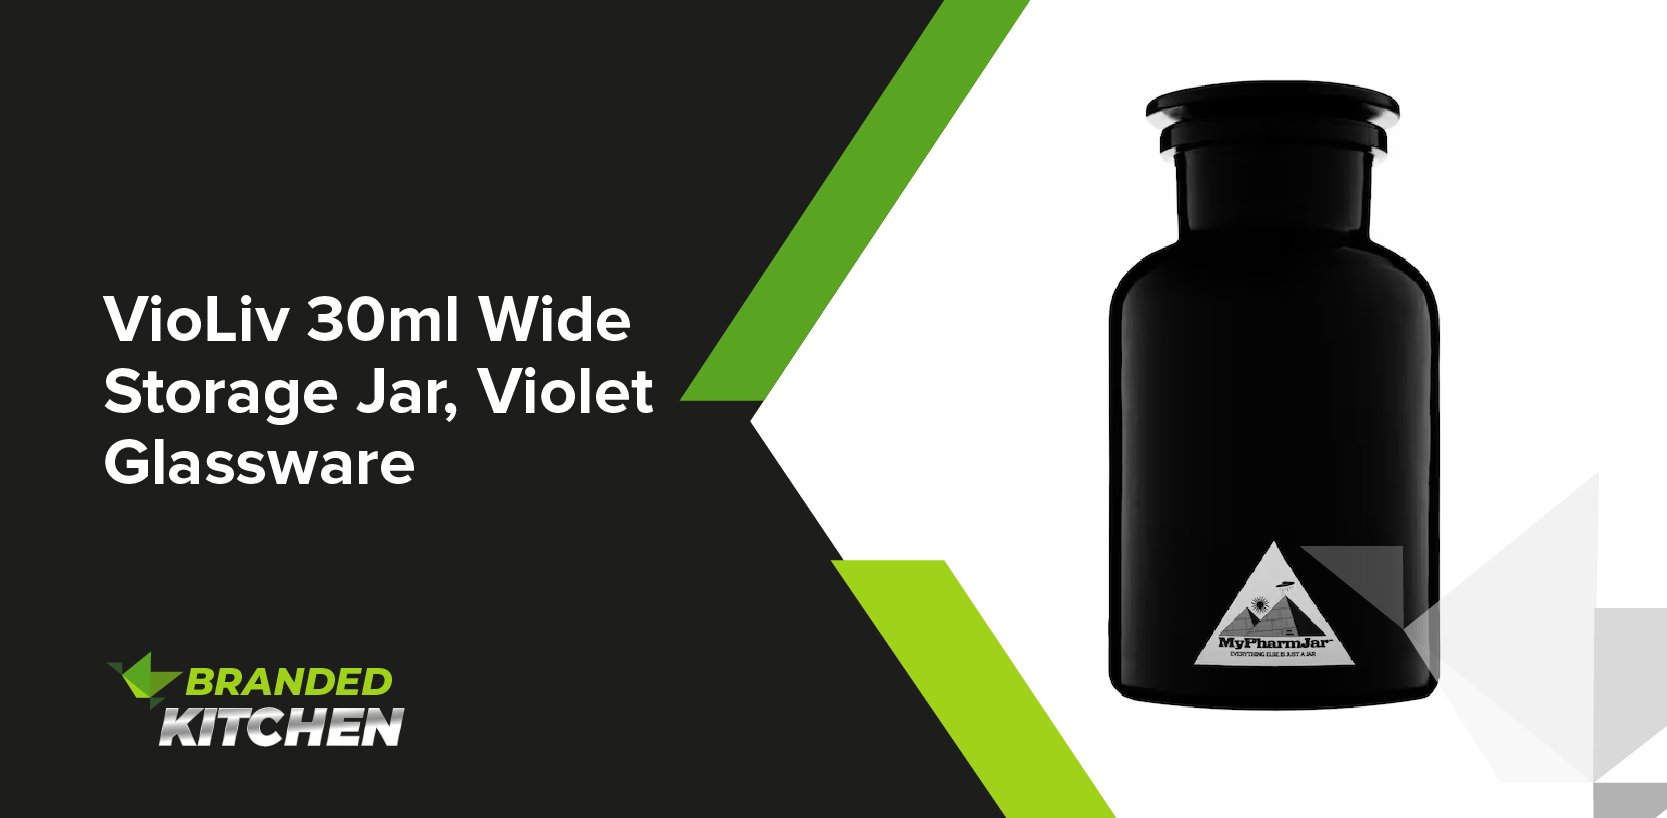 VioLiv 30ml Wide Storage Jar, Violet Glassware